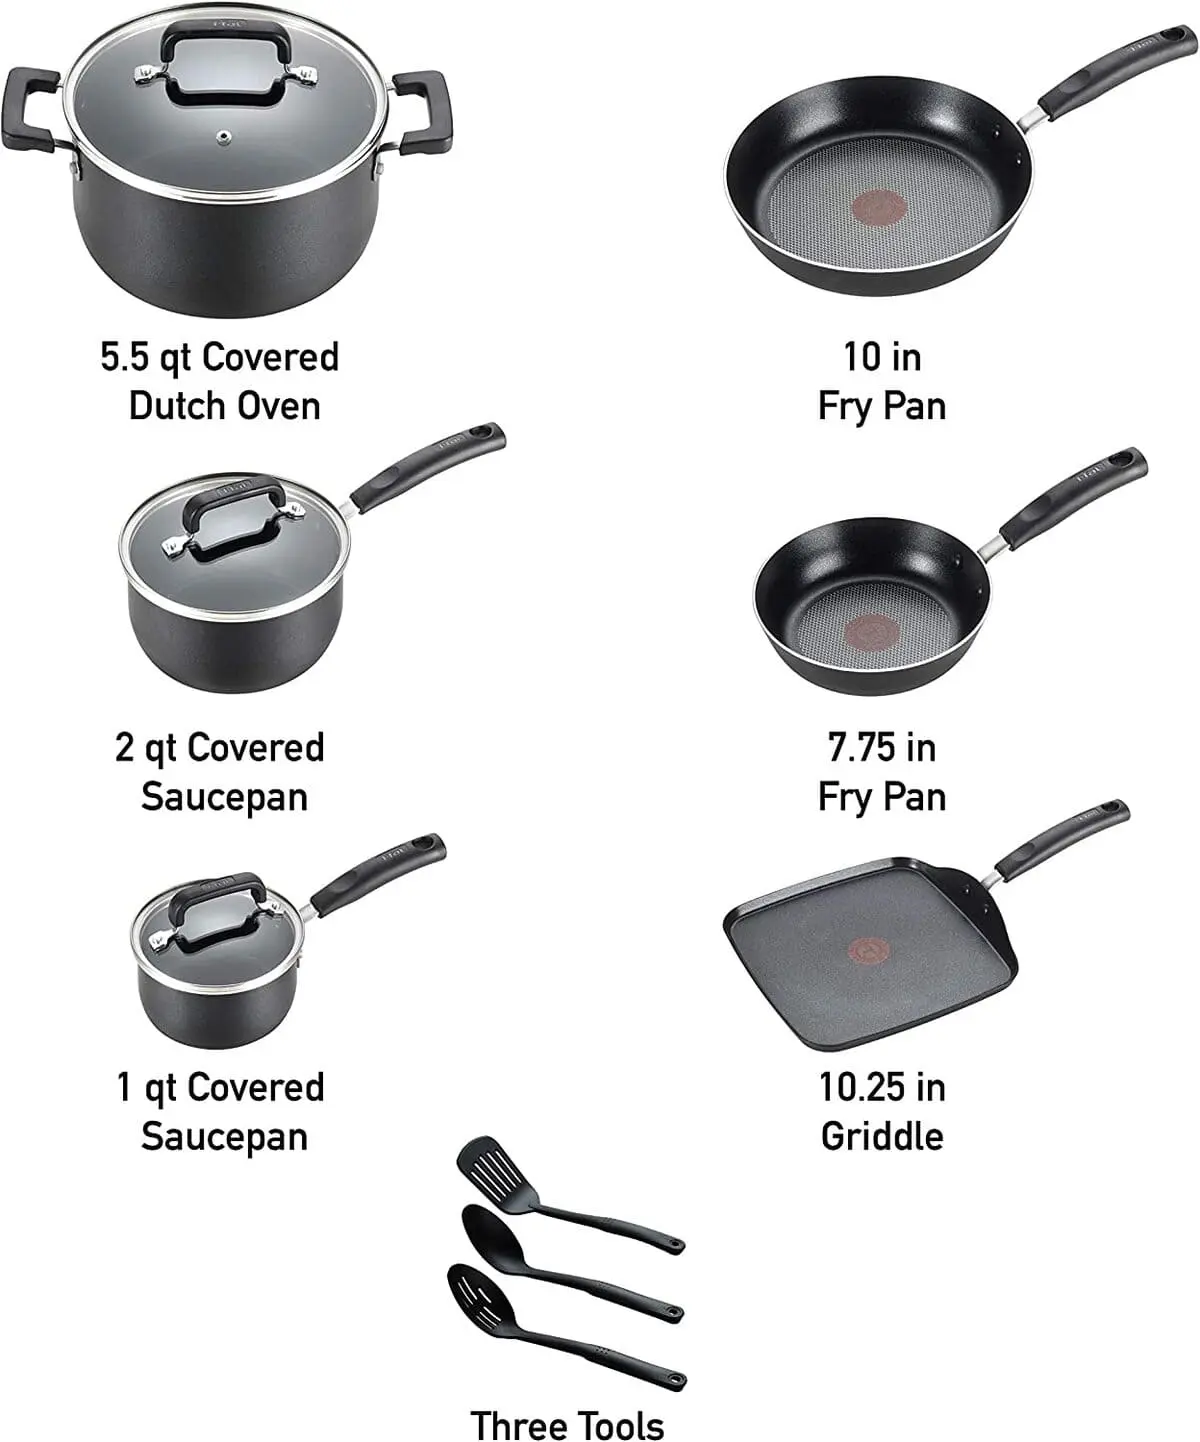 oven-safe t-fal pans